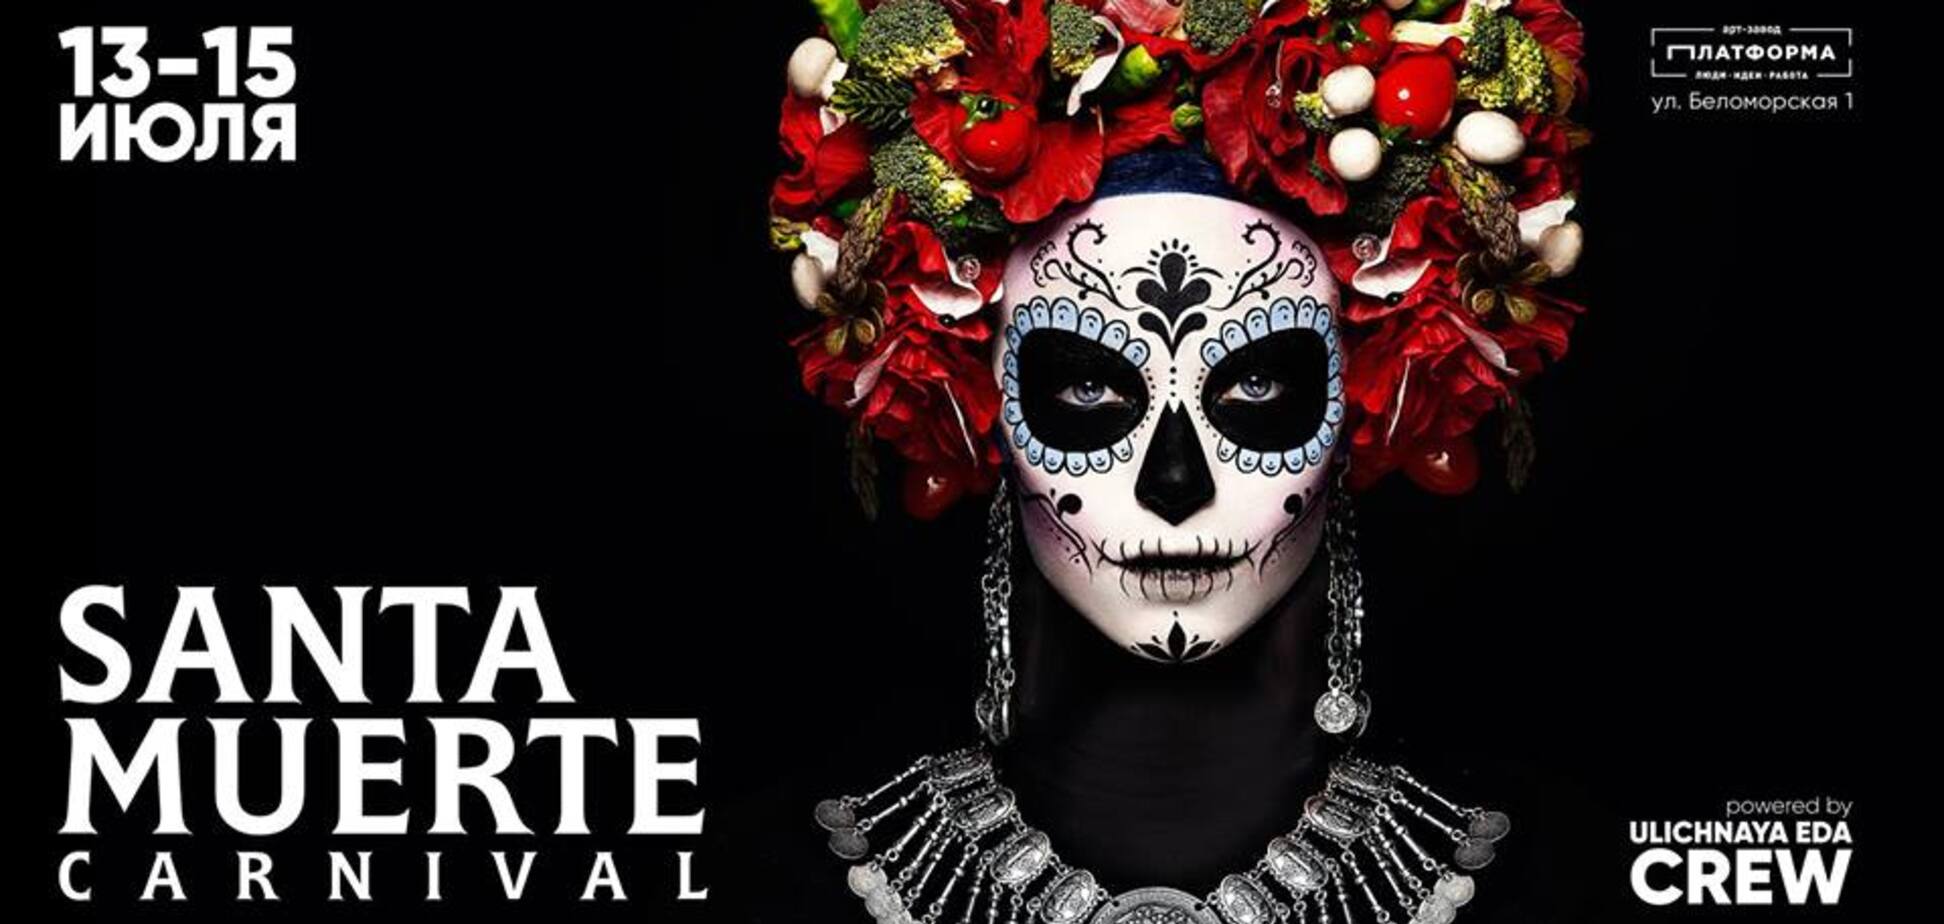 Нічний карнавал Santa Muerte, 13-15.07